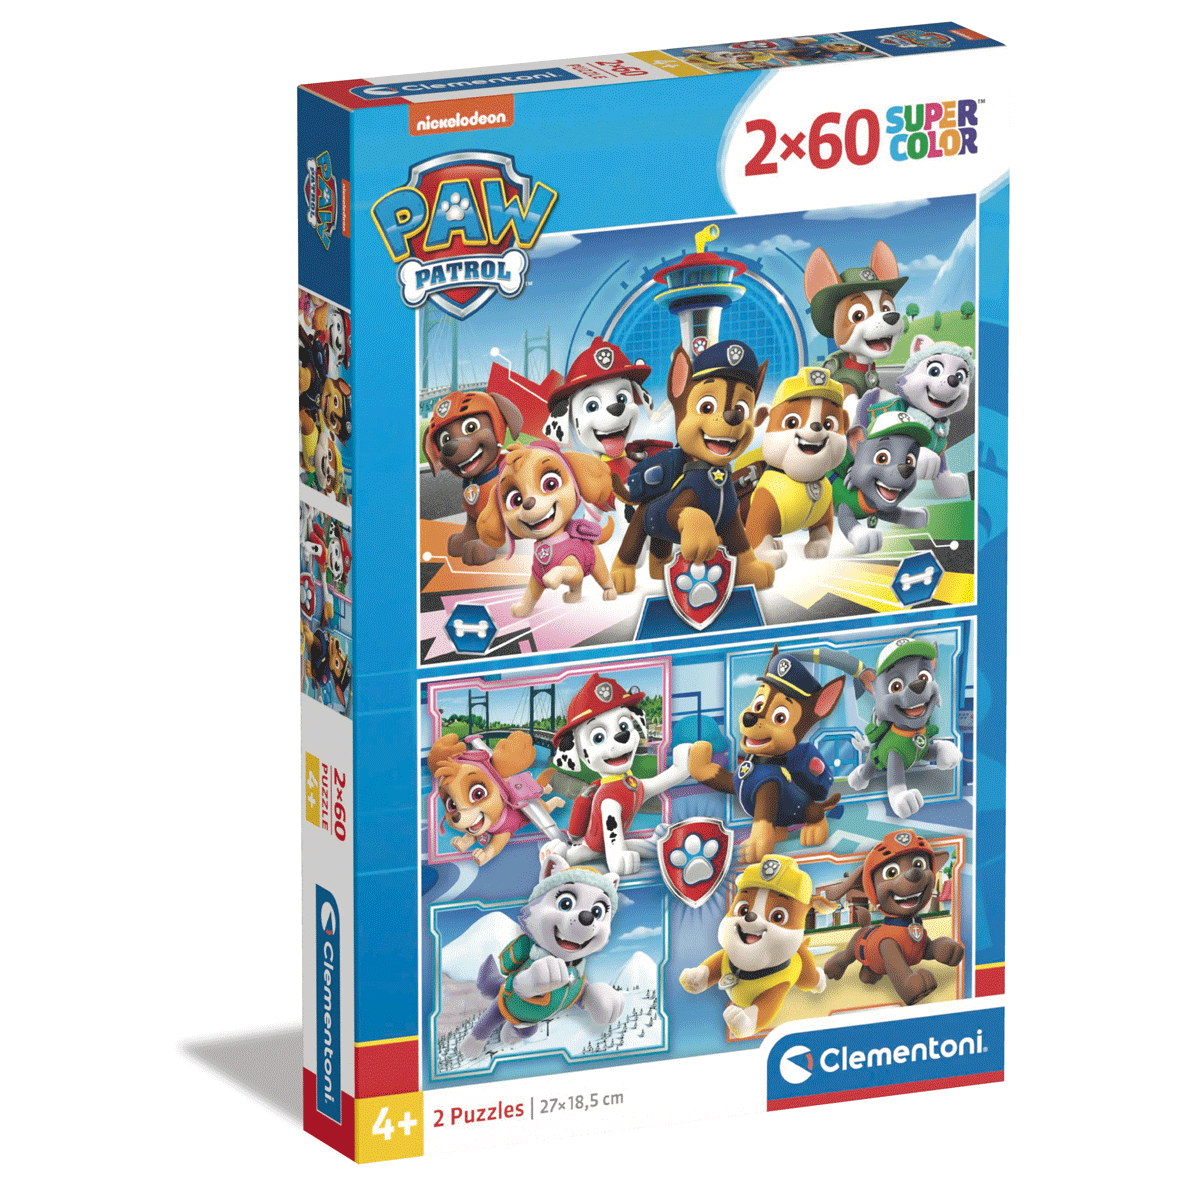 Clementoni supercolor puzzle paw patrol - 2x60 pezzi, puzzle bambini 4 anni - CLEMENTONI